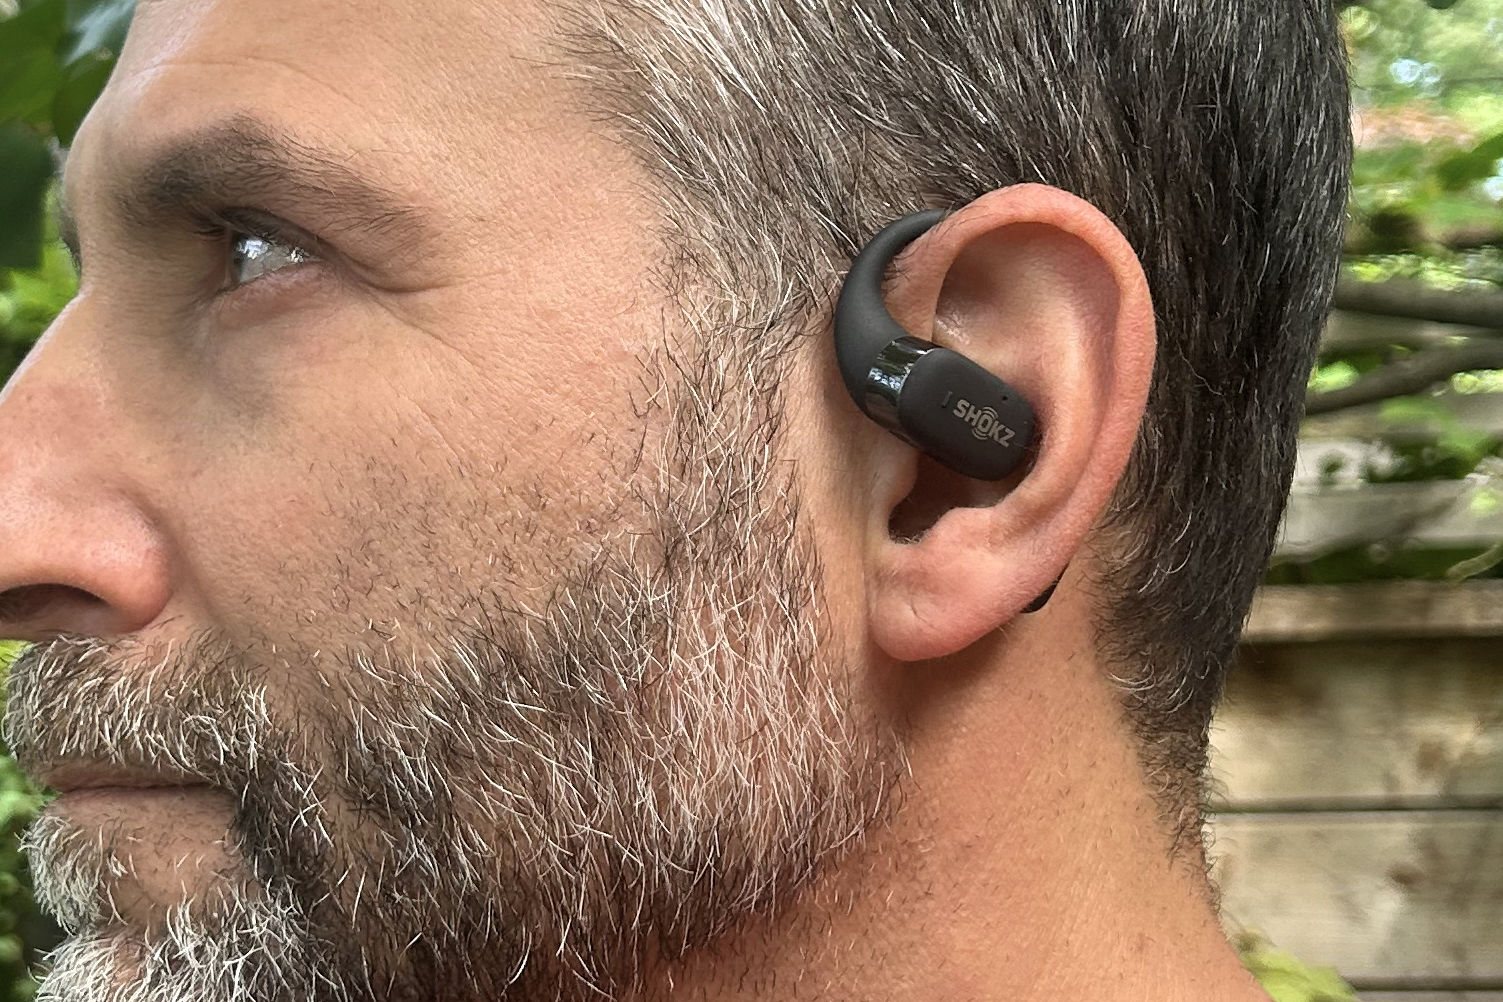 The 15 Best Wireless Earbuds of 2023 — Bluetooth Earphone Reviews